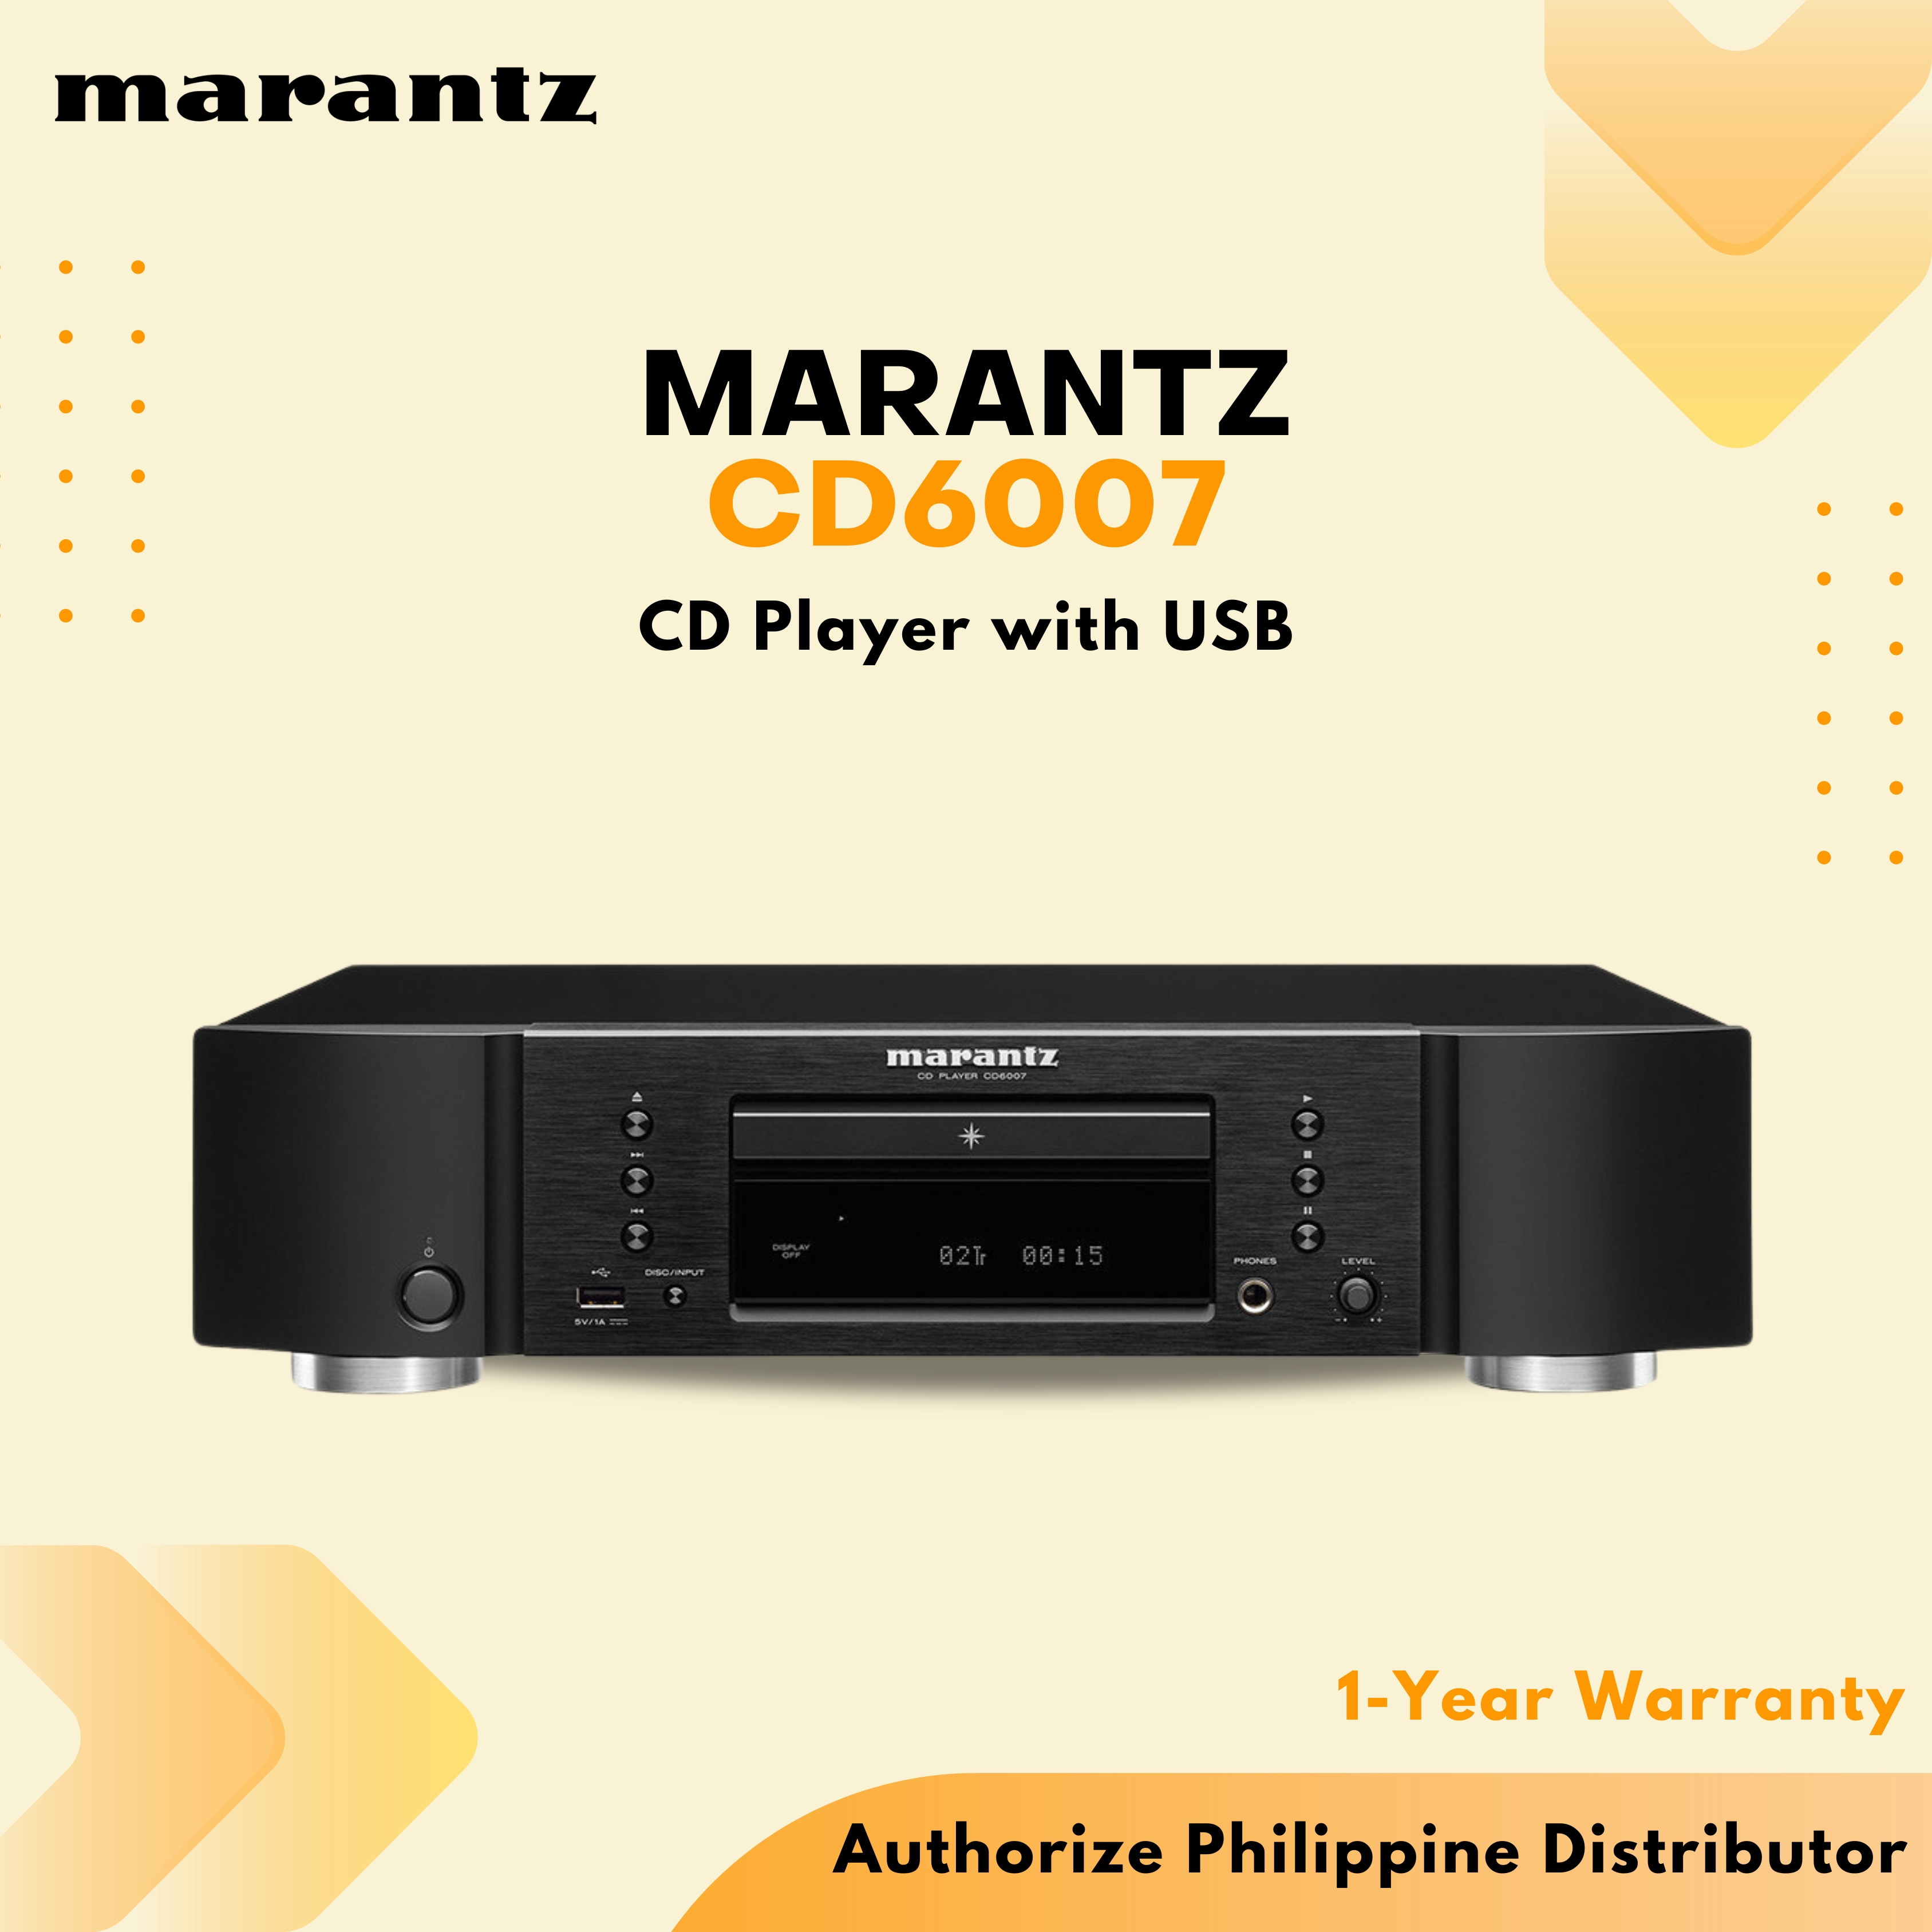 Marantz CD6007 Single-disc CD player with USB port